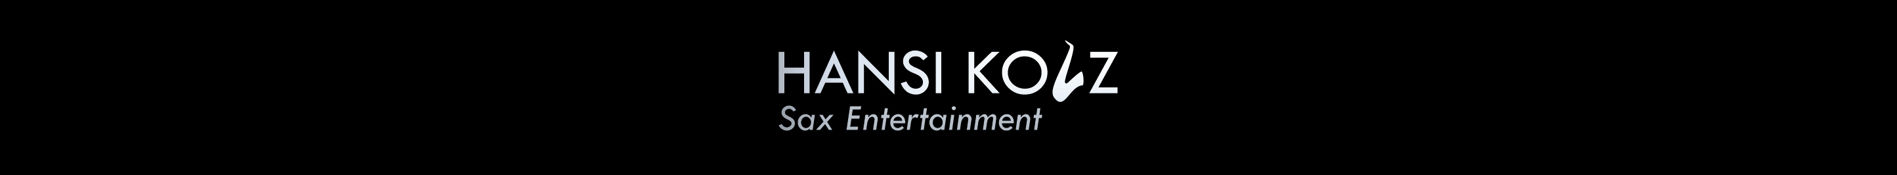 Hansi Kolz - Sax Entertainment